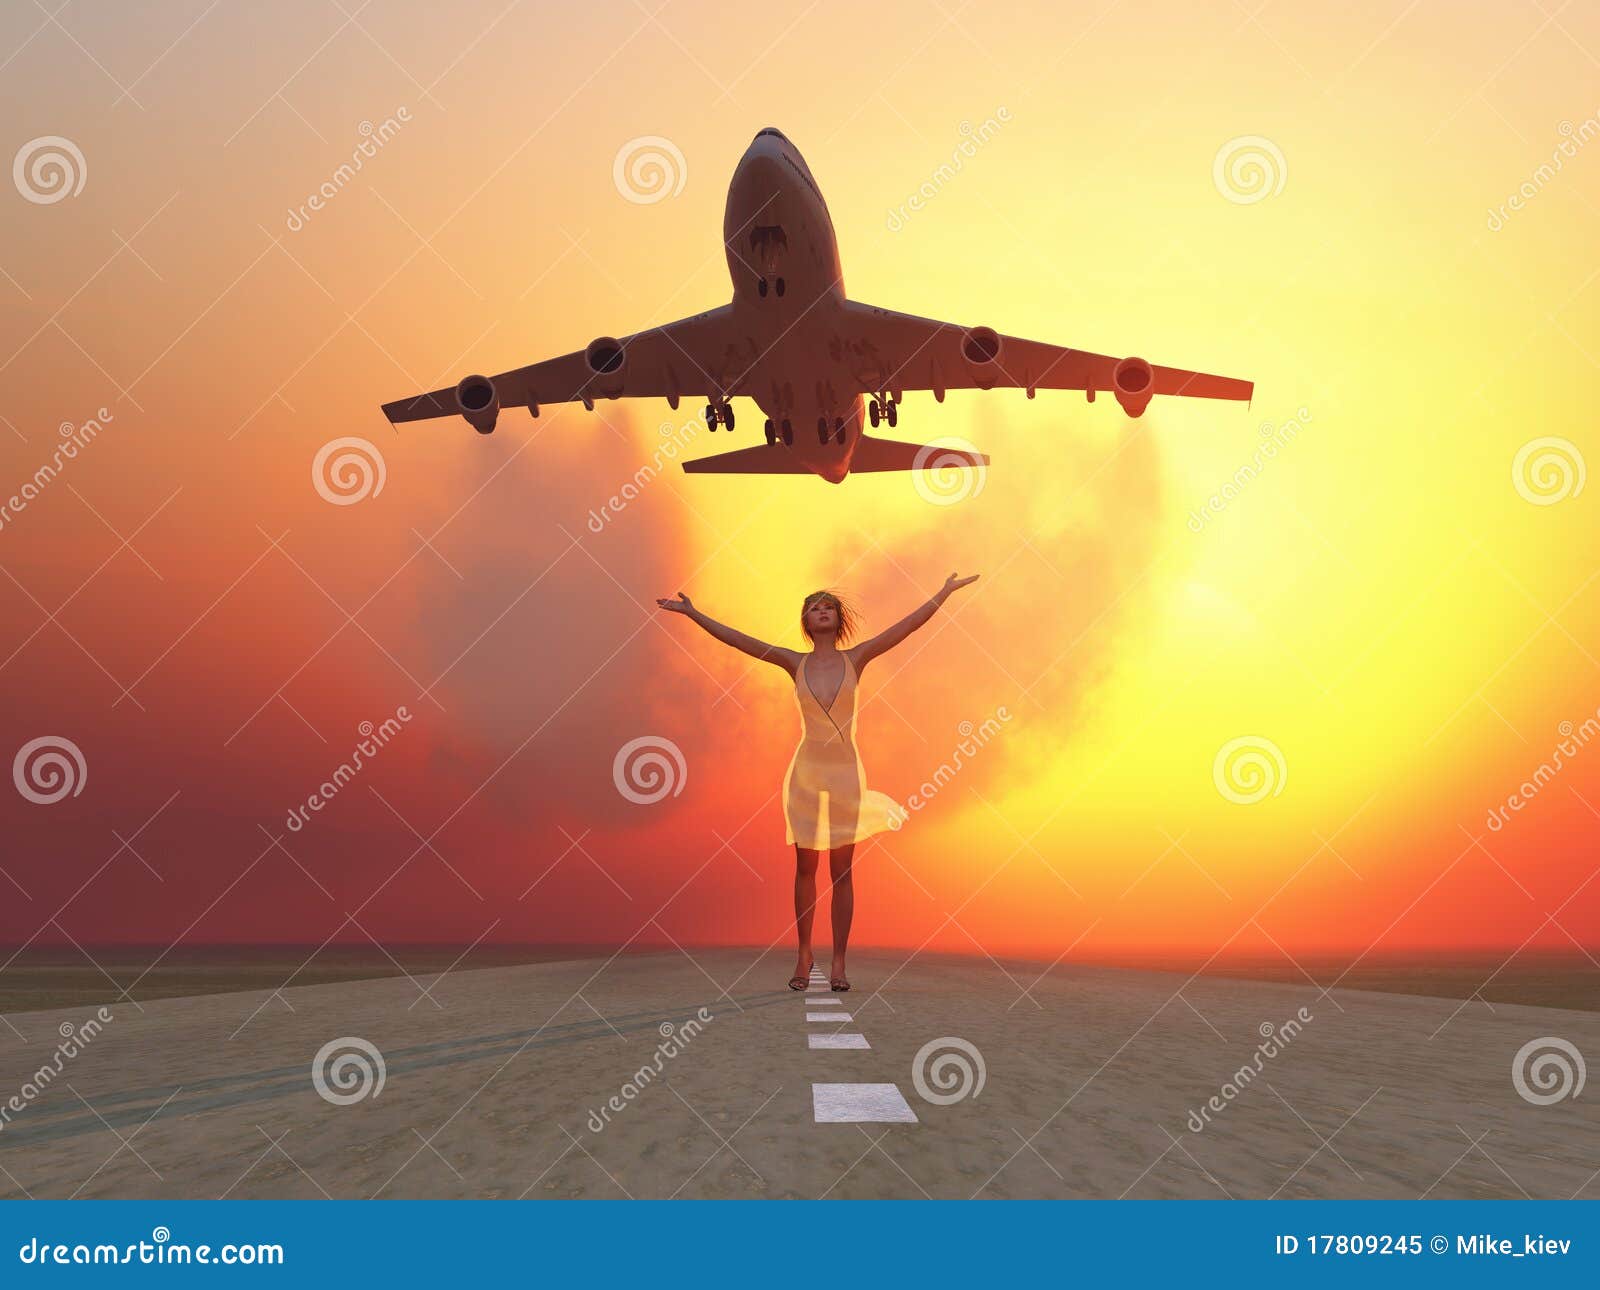 woman and soaring flight